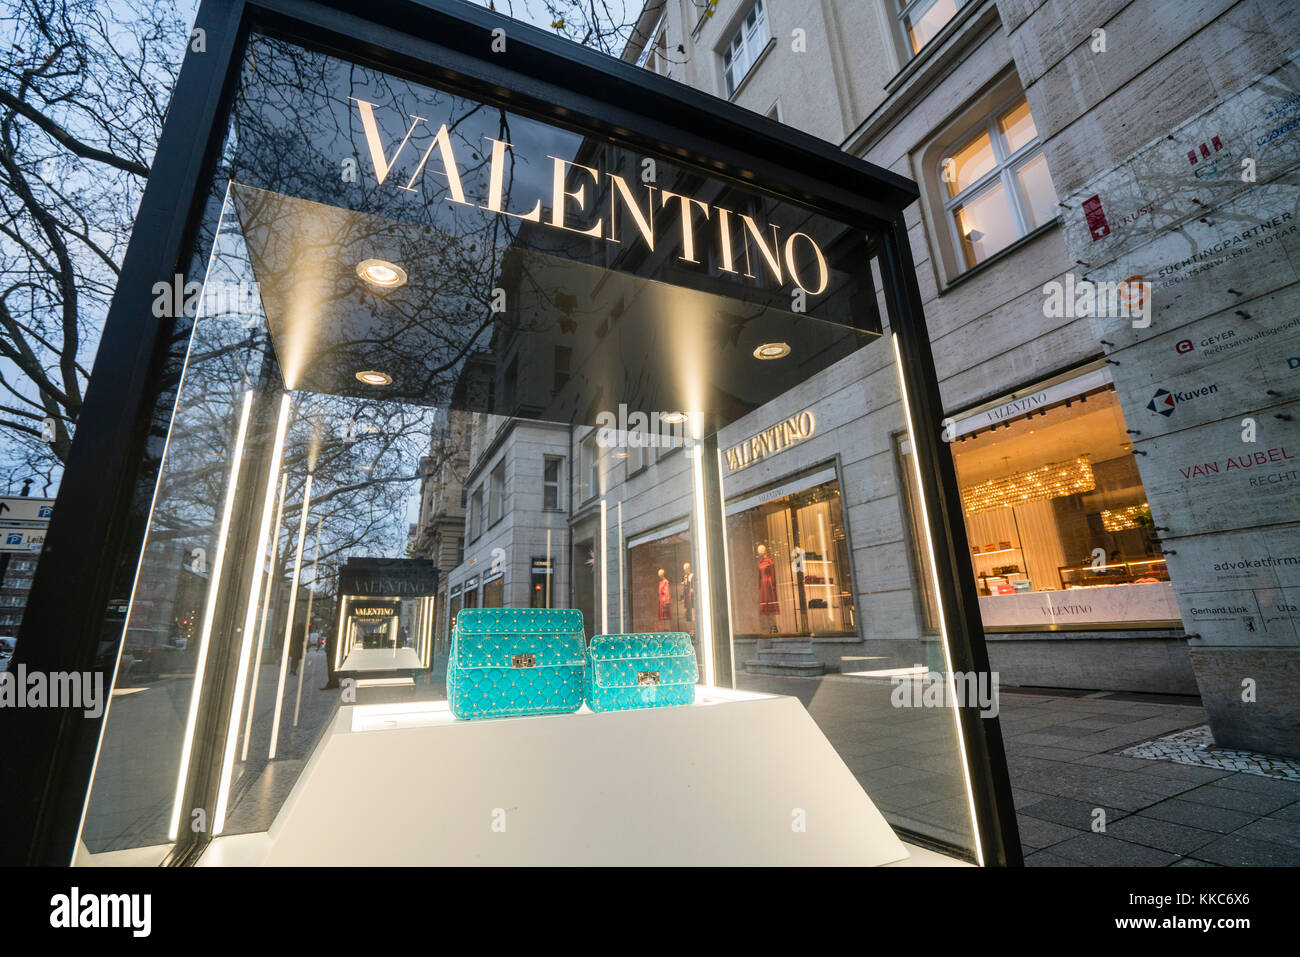 Kurfürstendamm Valentino Shop Berlin Germany Fotos e Imágenes de stock -  Alamy